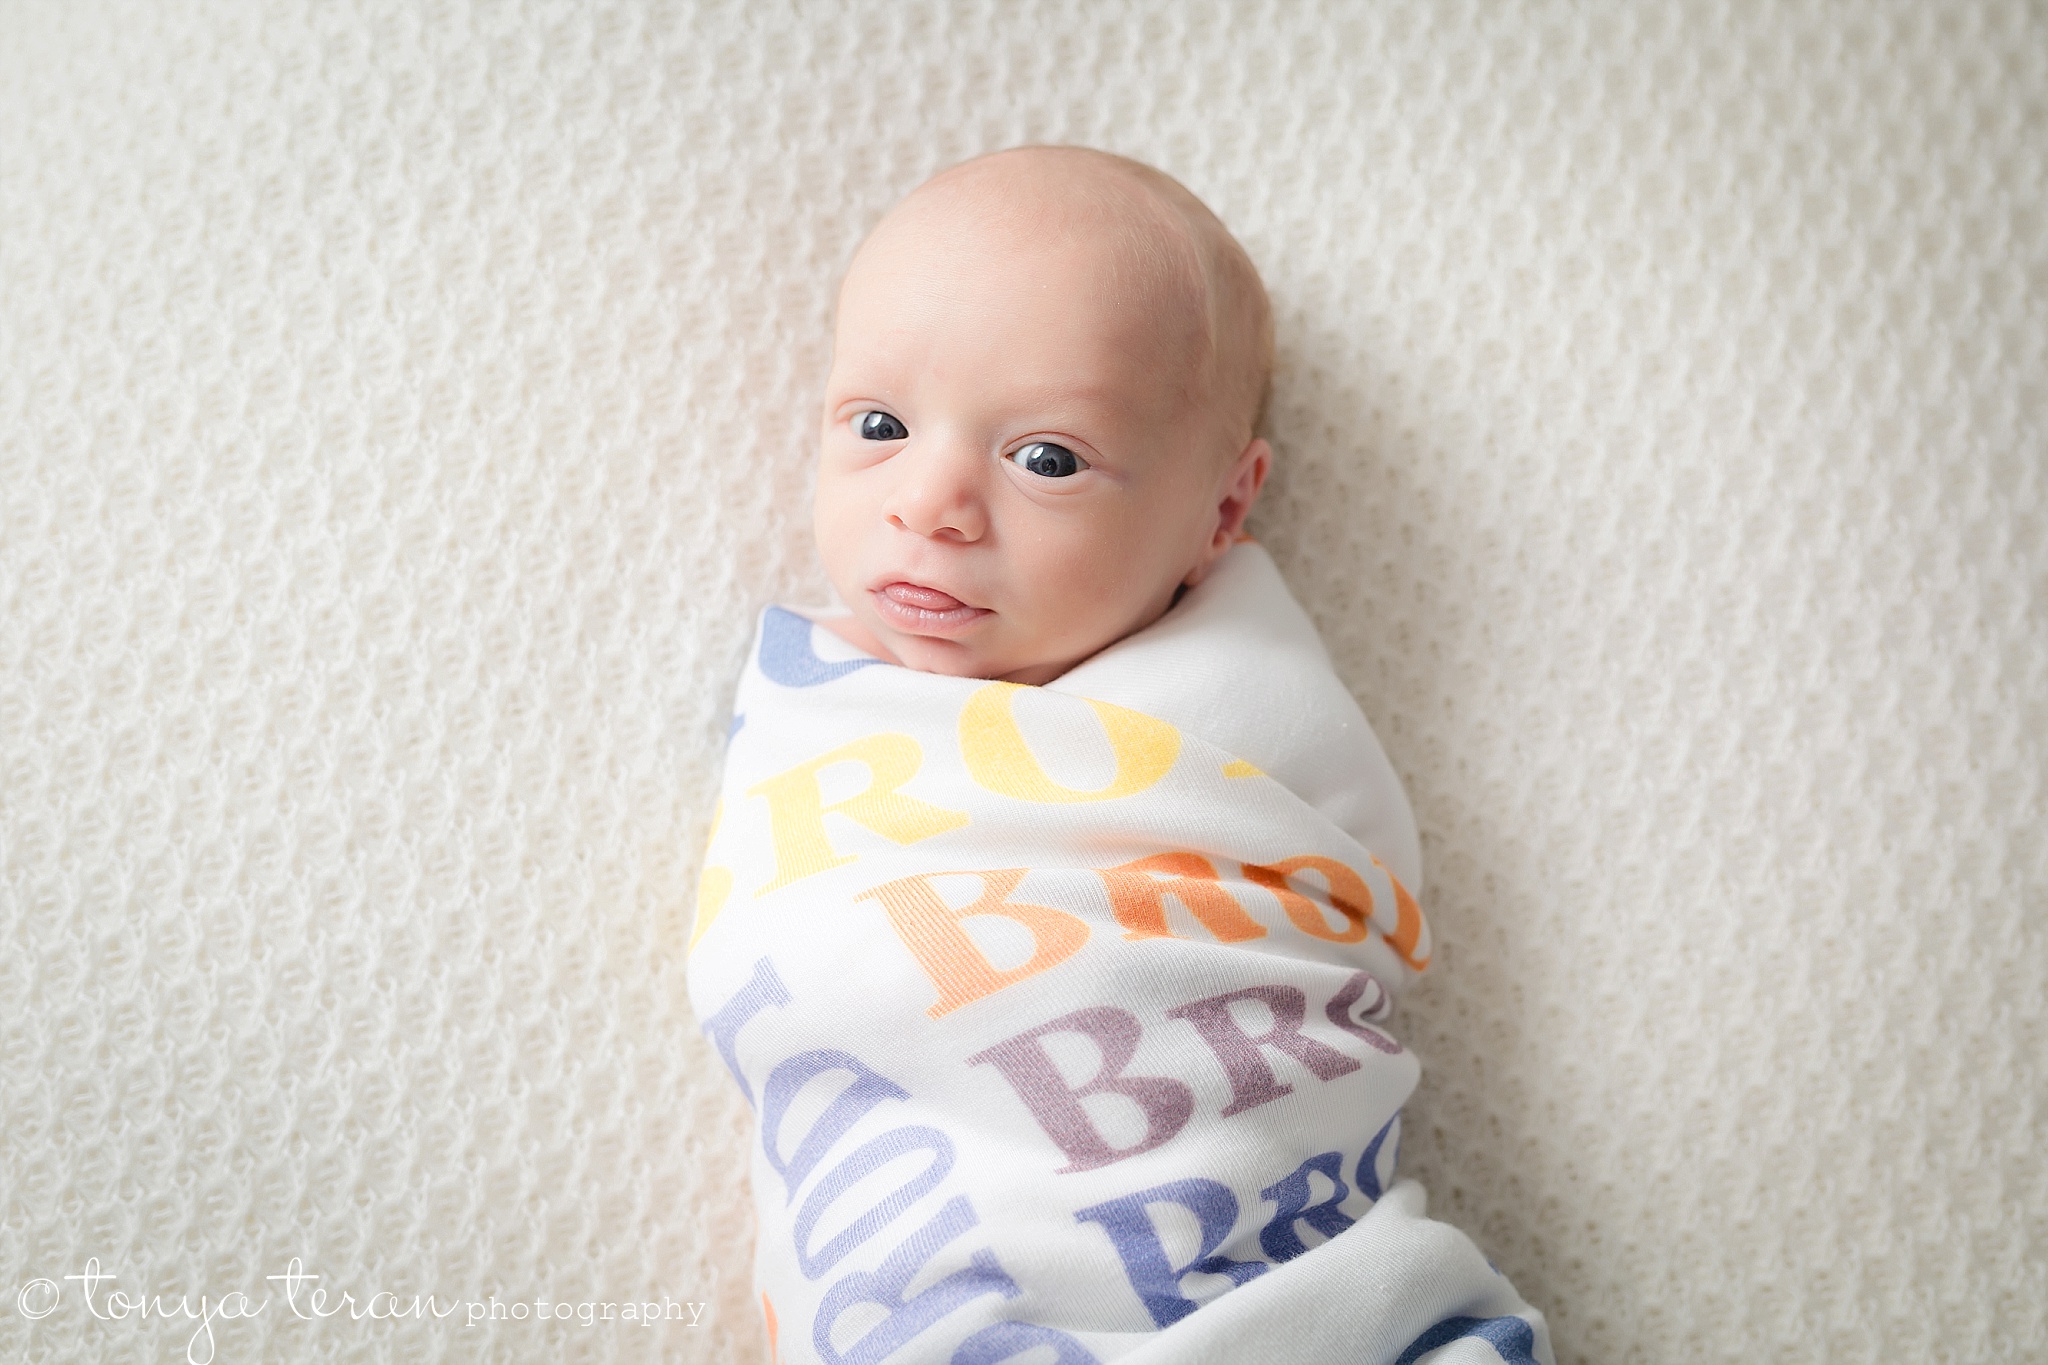 Family Newborn Photo Session | Tonya Teran Photography, Washington, DC Newborn, Baby, and Family Photographer